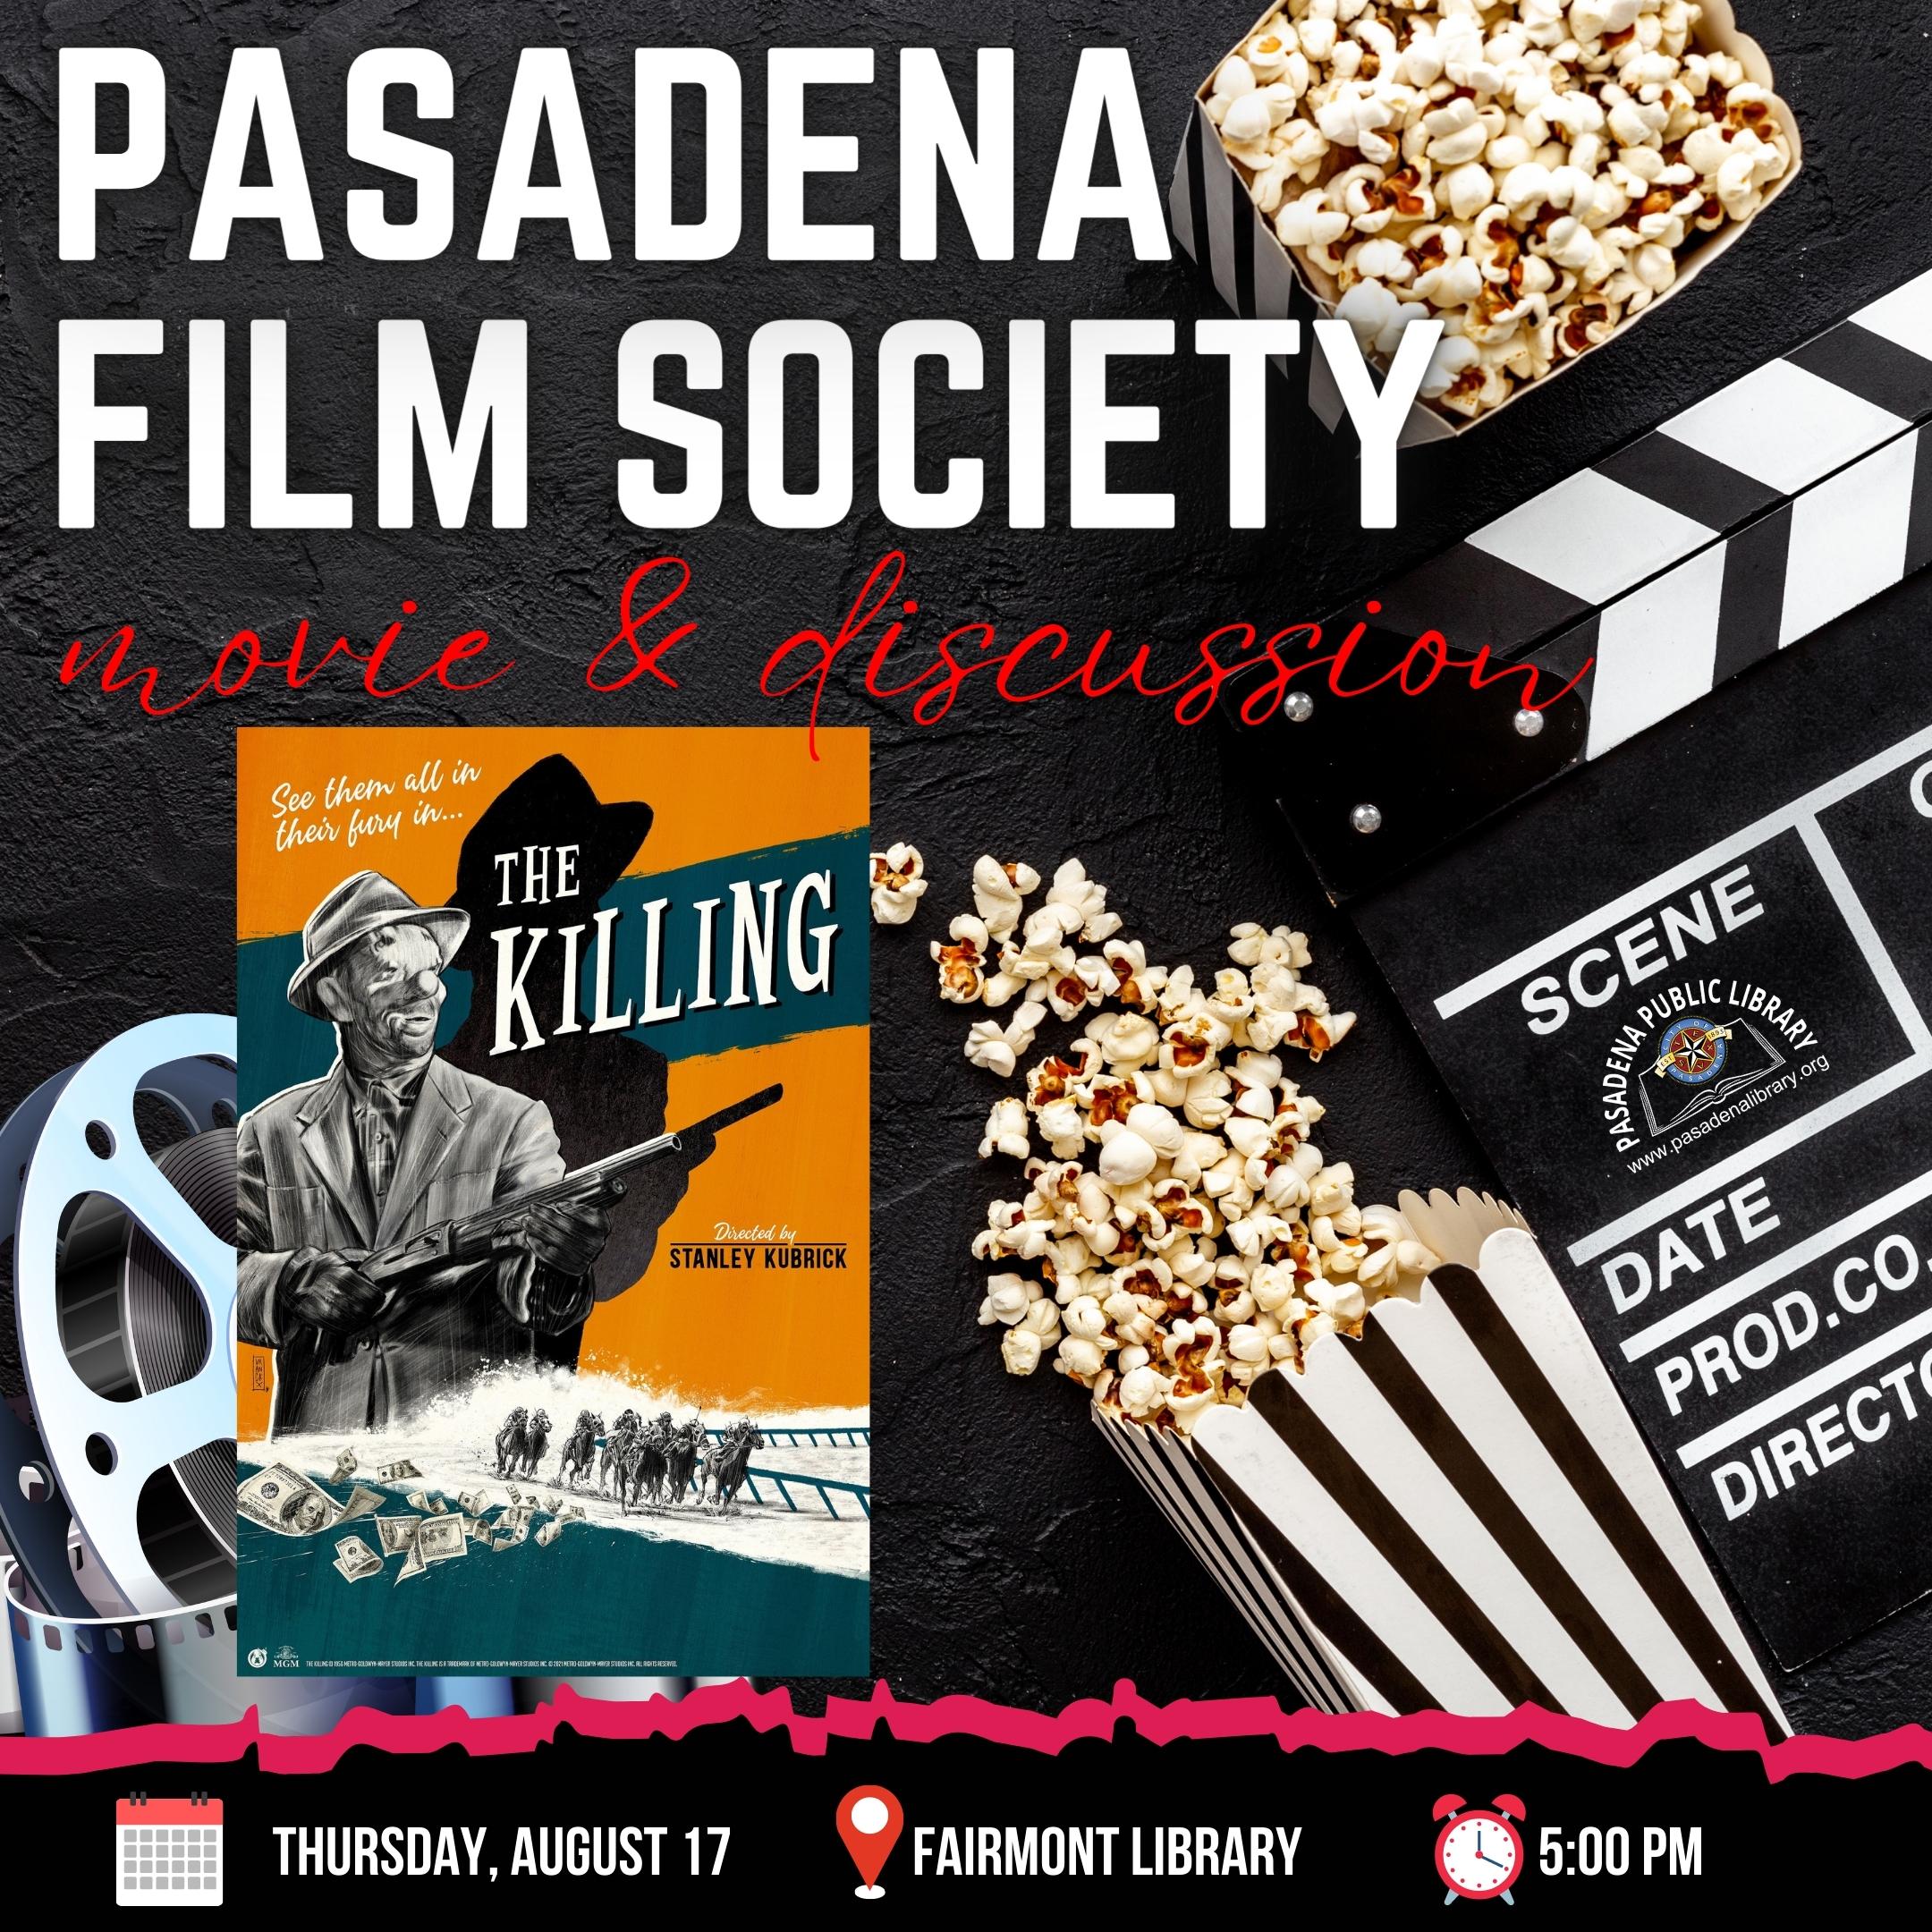 Pasadena Film Society showing The Killing by Stanley Kubrick